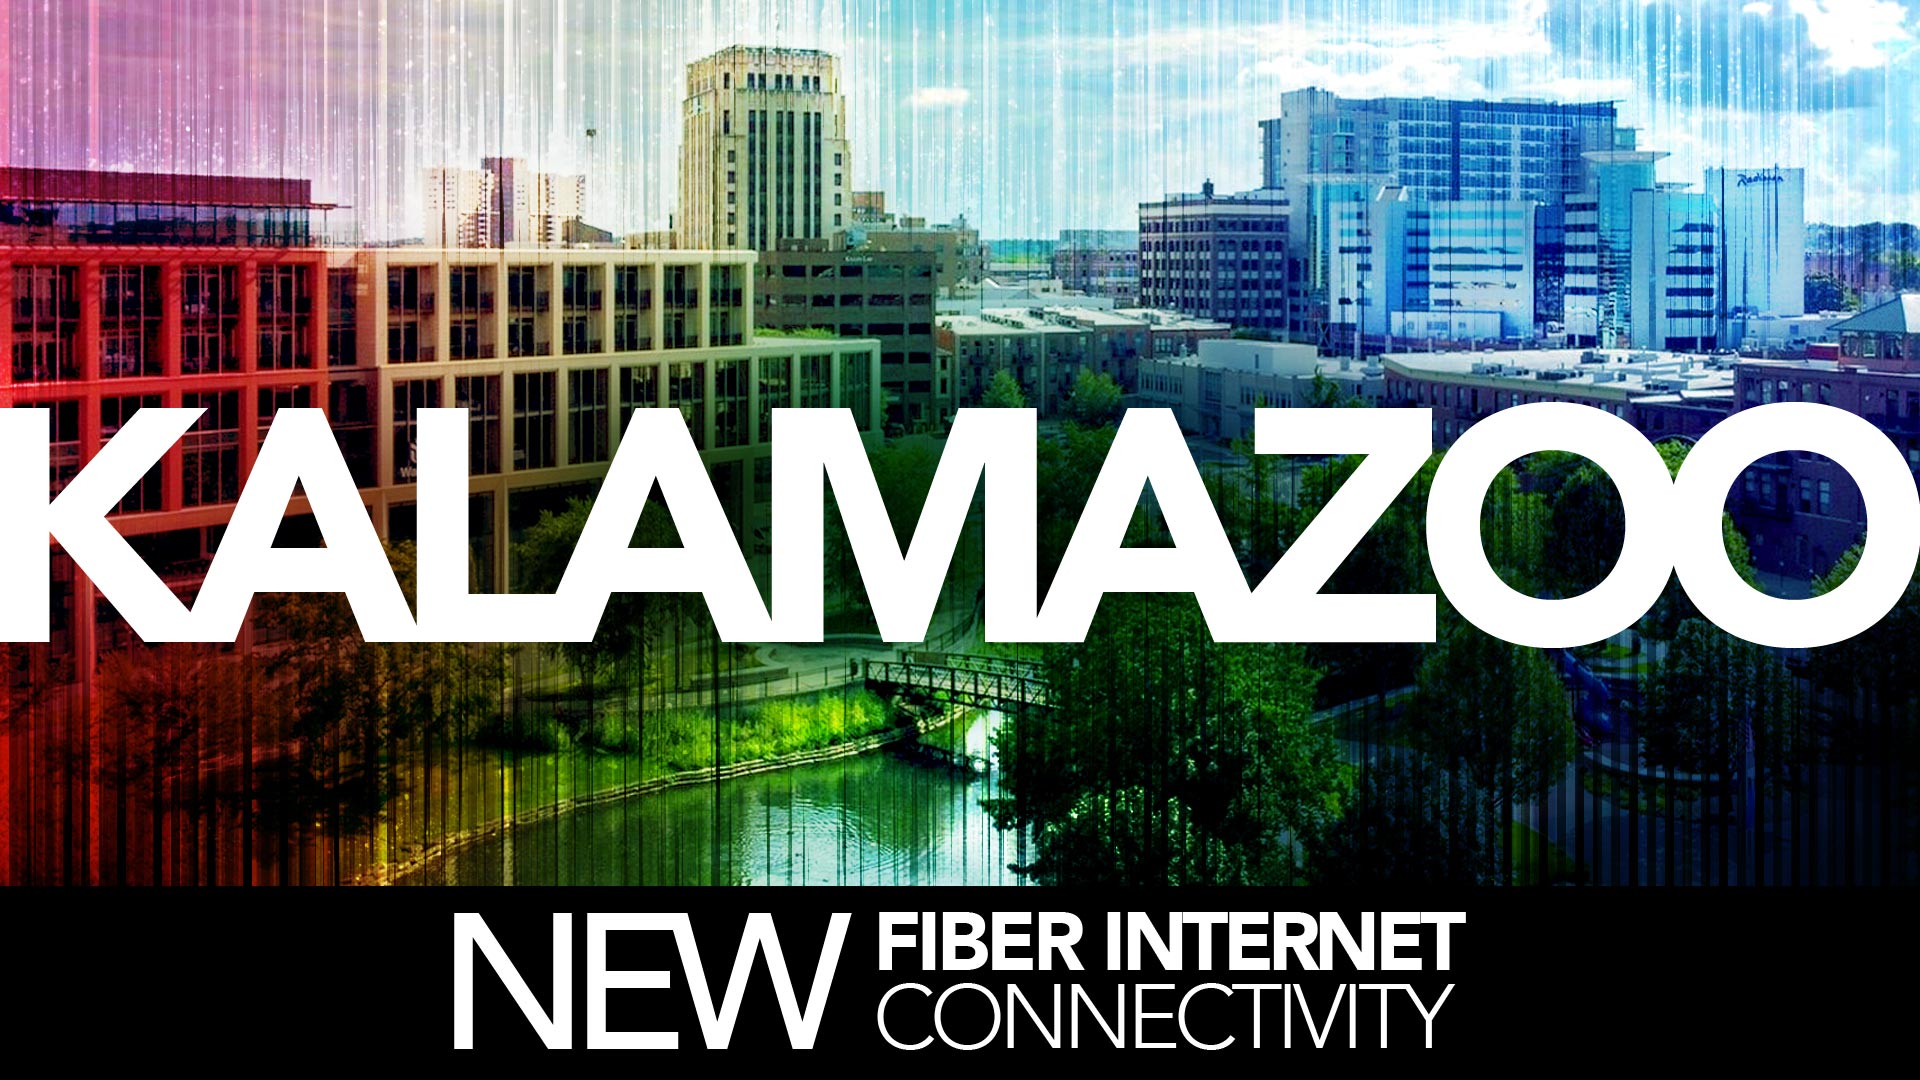 New Fiber Internet Connectivity in Downtown Kalamazoo